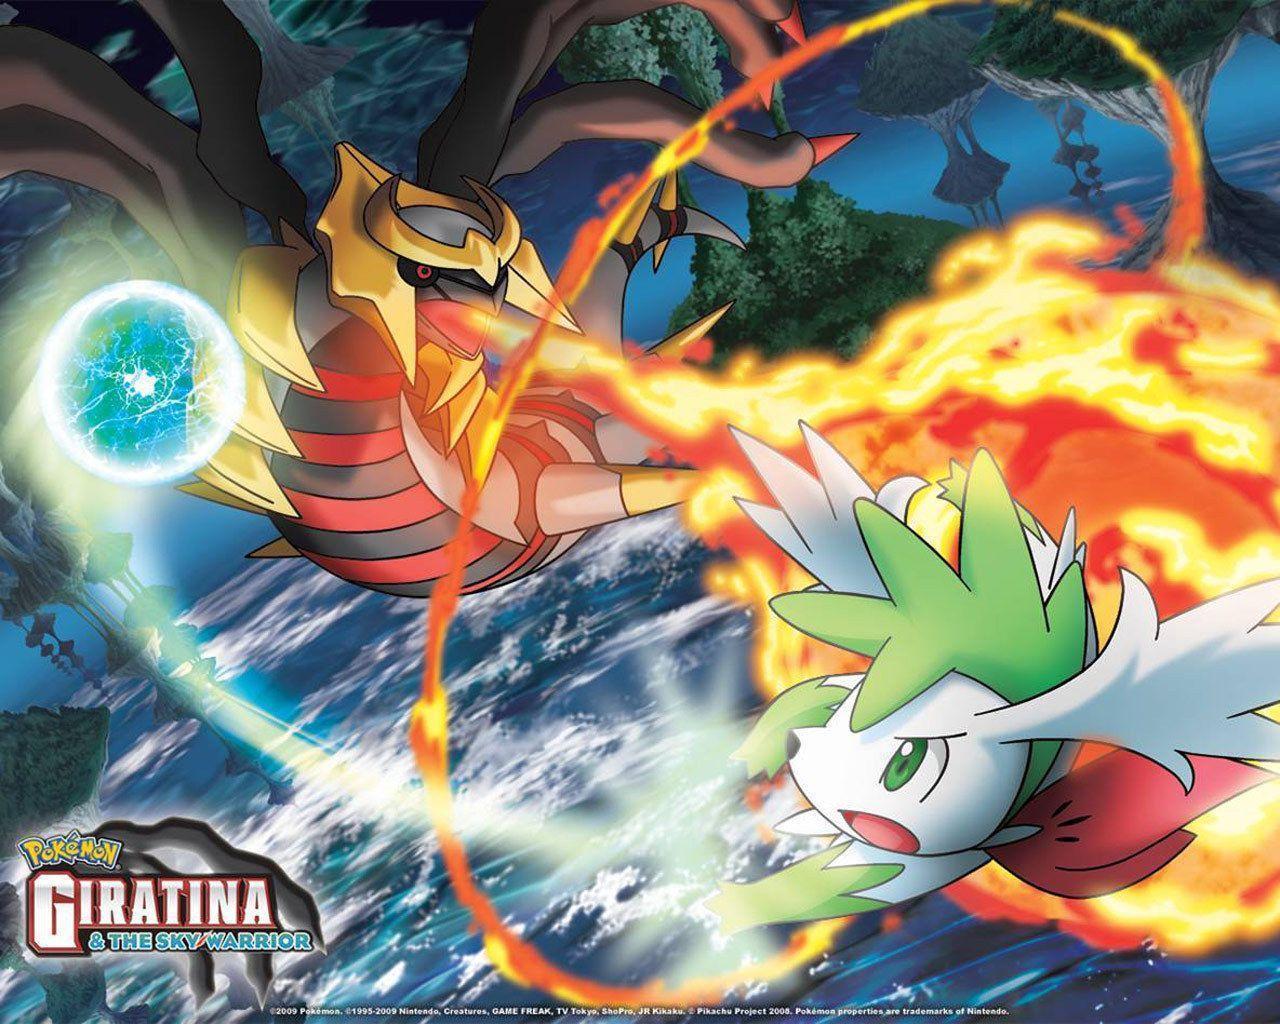 Pokémon image Sky Shaymin and Giratina HD wallpaper and background